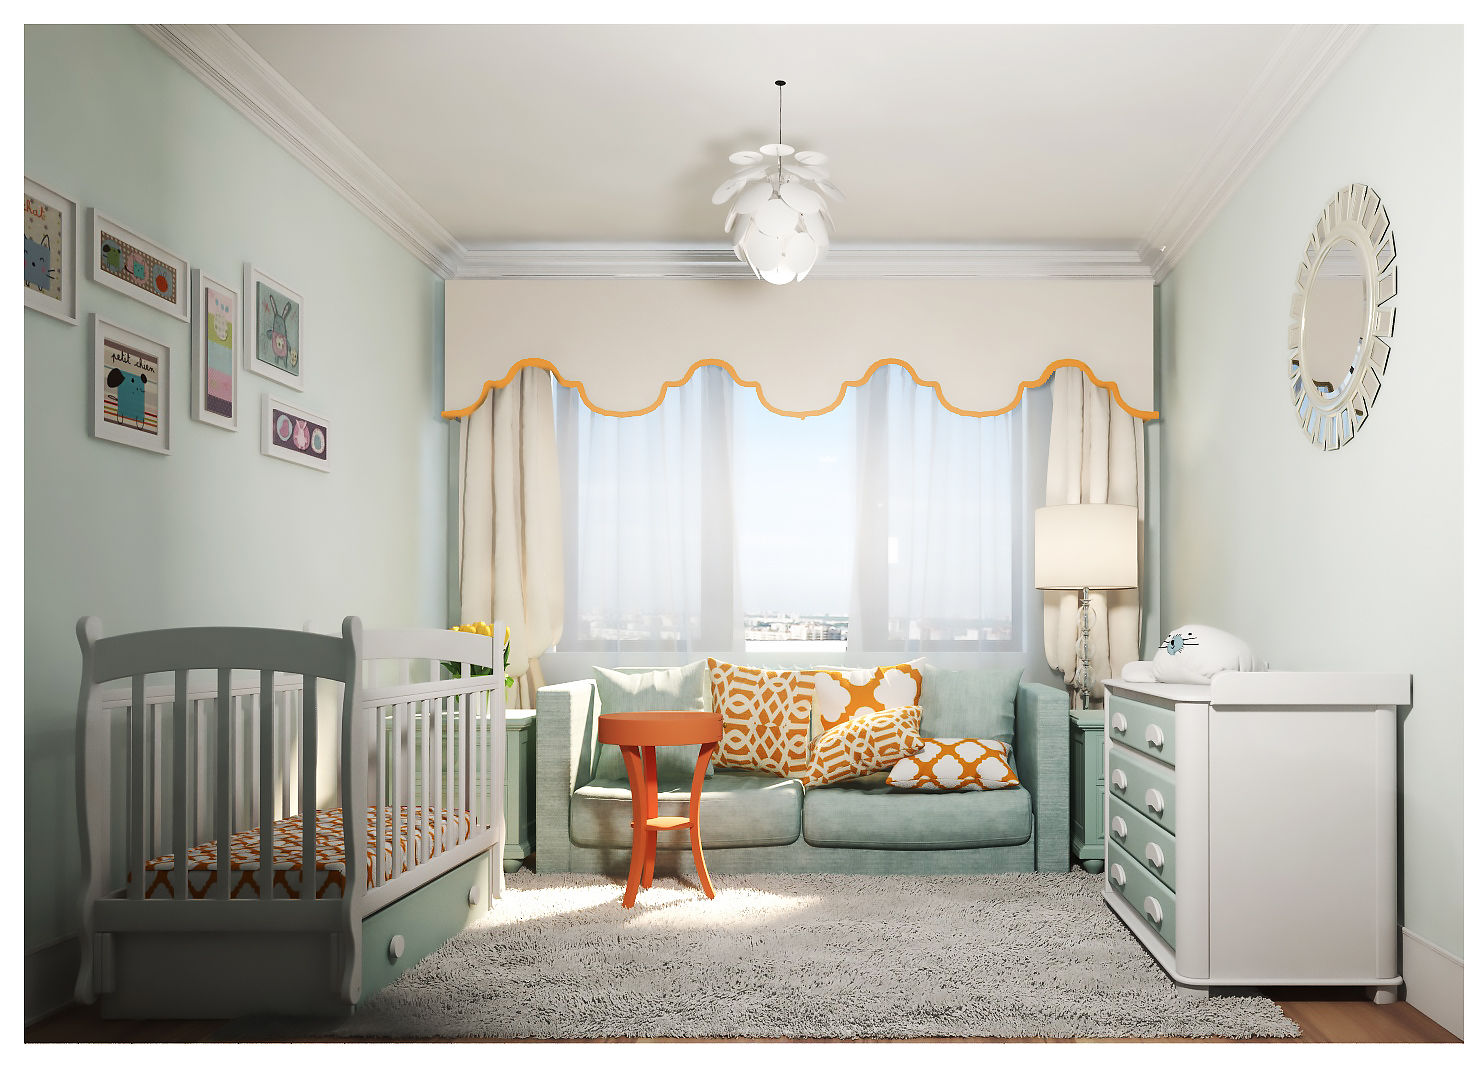 3-bedroom Apartment, Moscow , Alexander Krivov Alexander Krivov Klasyczny pokój dziecięcy